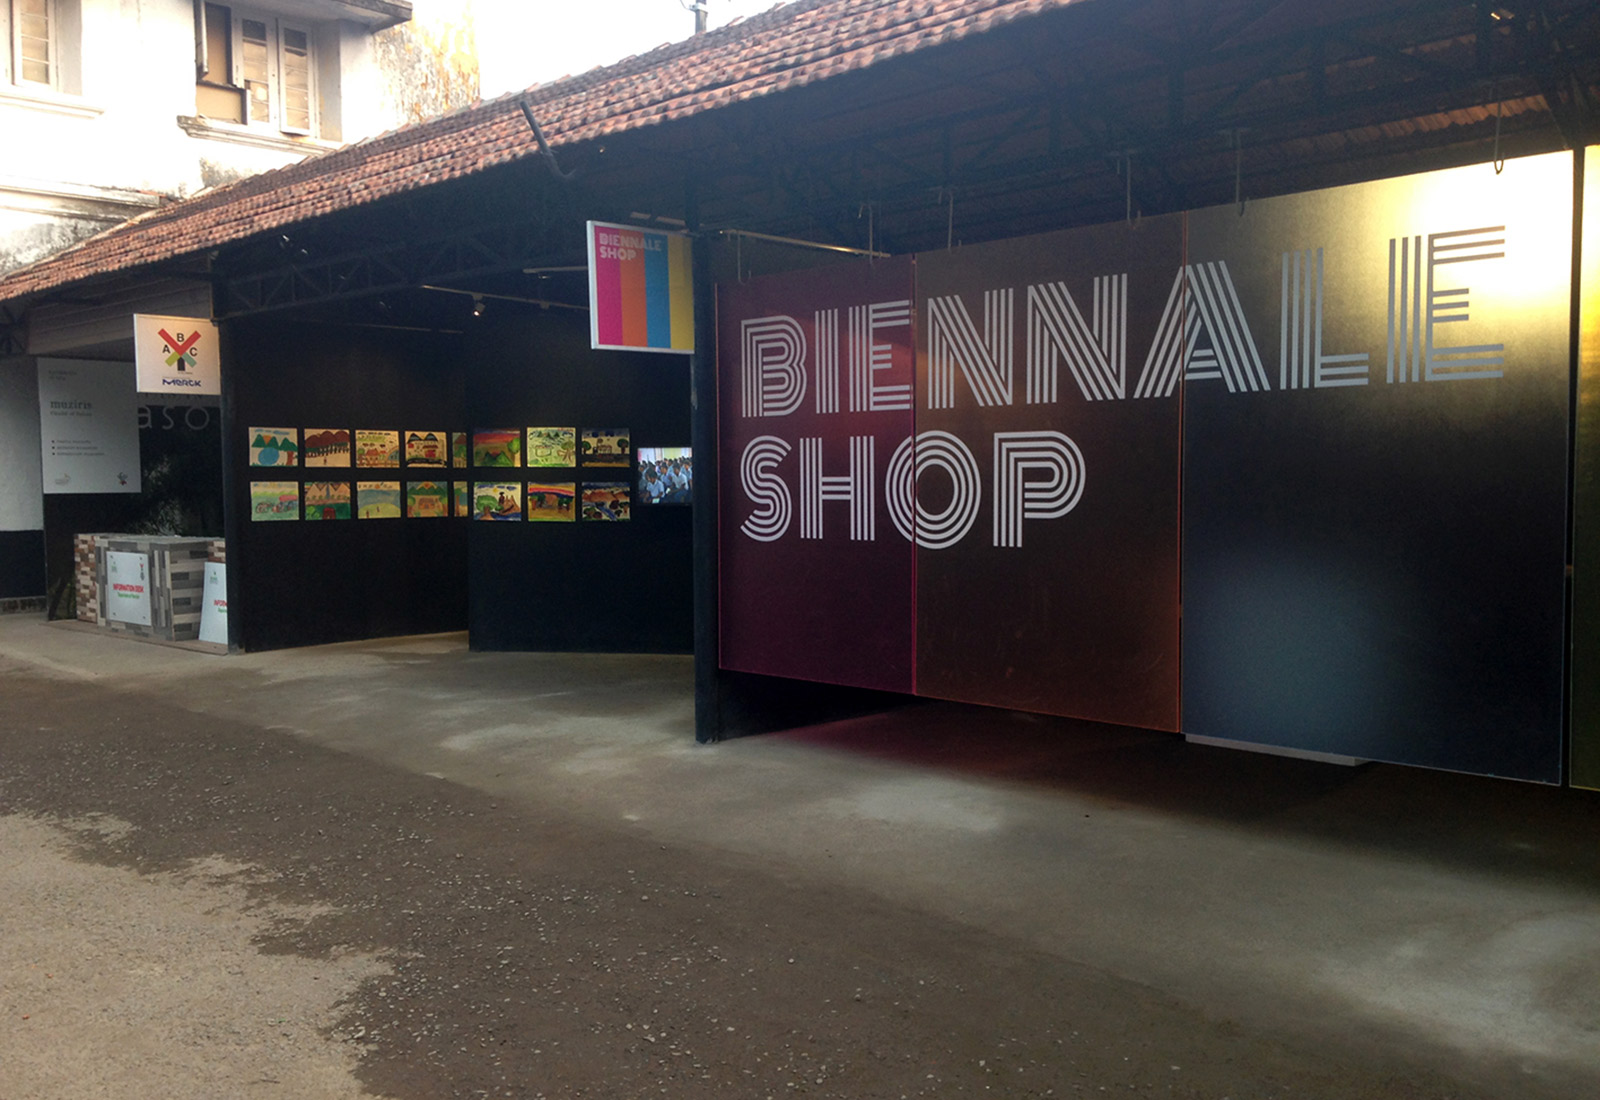 Biennale-shop